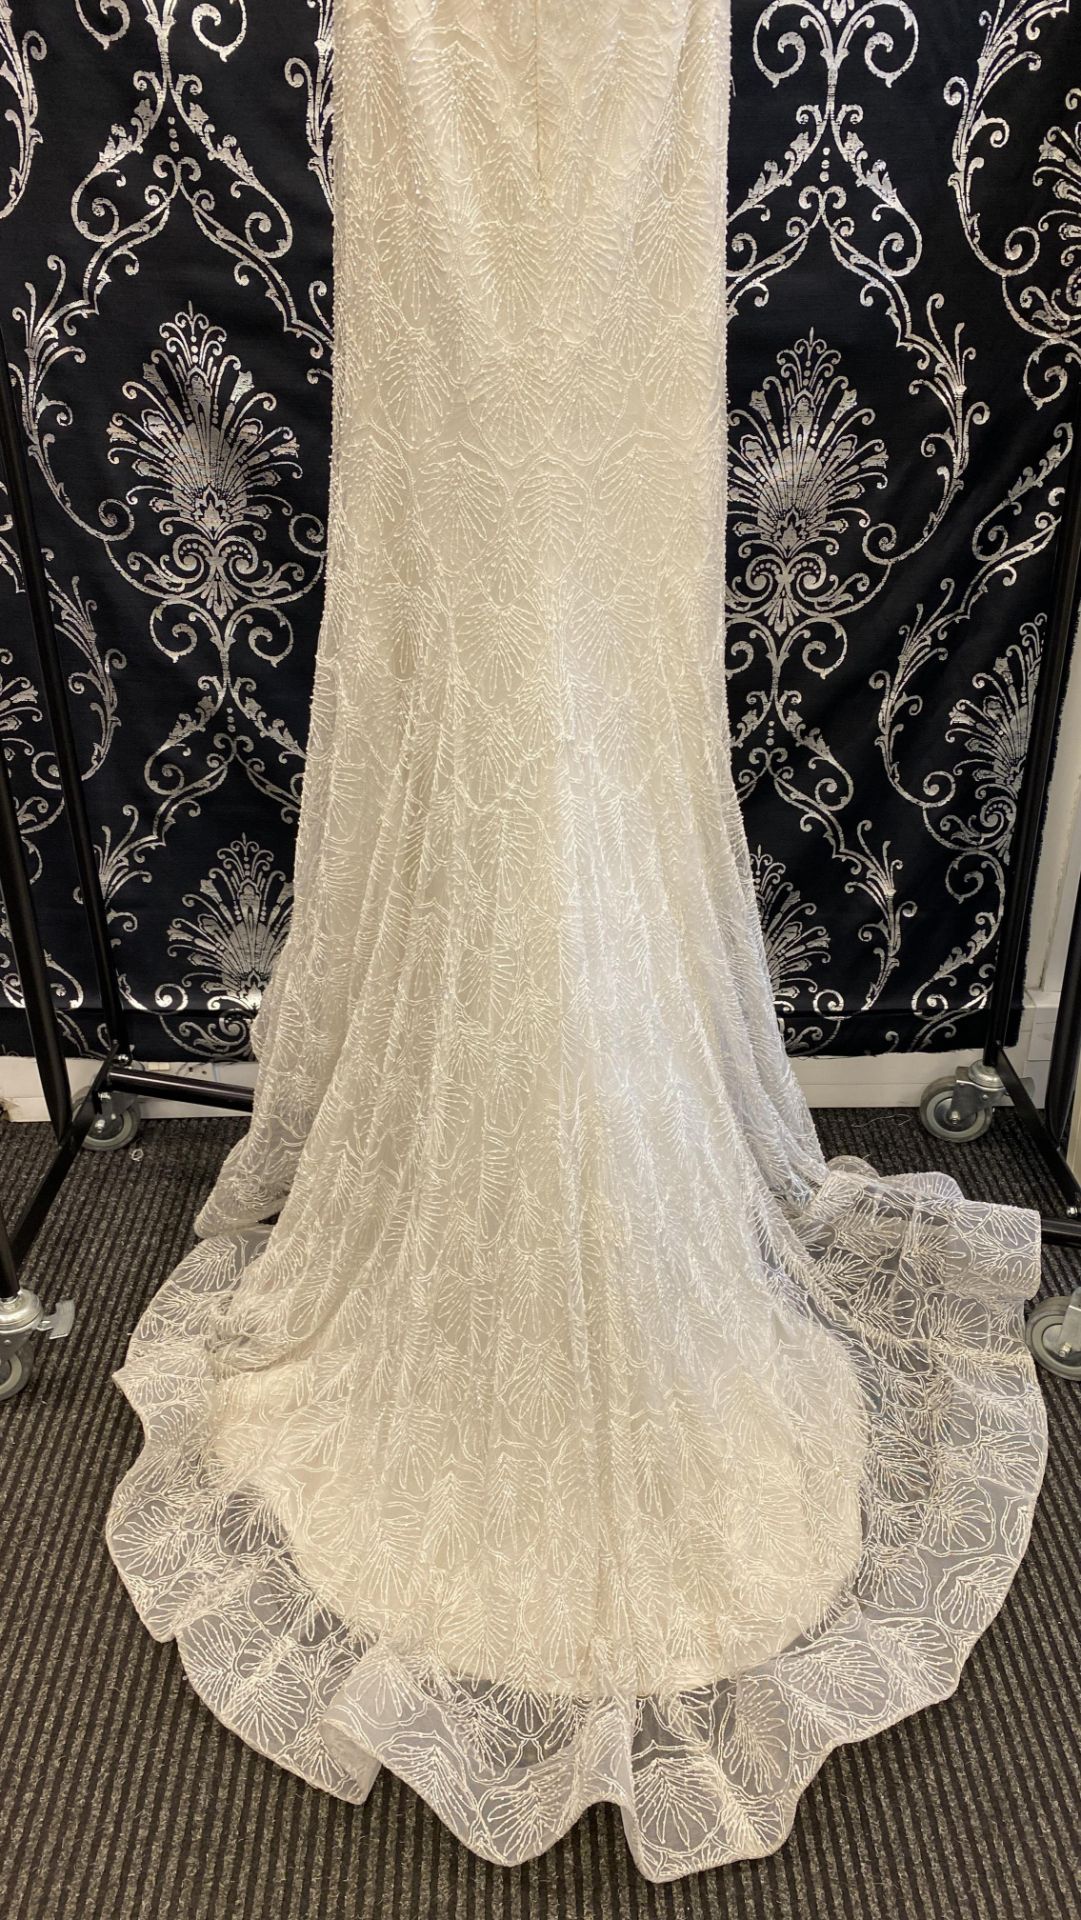 1 x LUSAN MANDONGUS/ LM 'Verna'Beautiful Strapless Lace Fishtail Designer Wedding Dress RRP £2,500 - Image 5 of 8